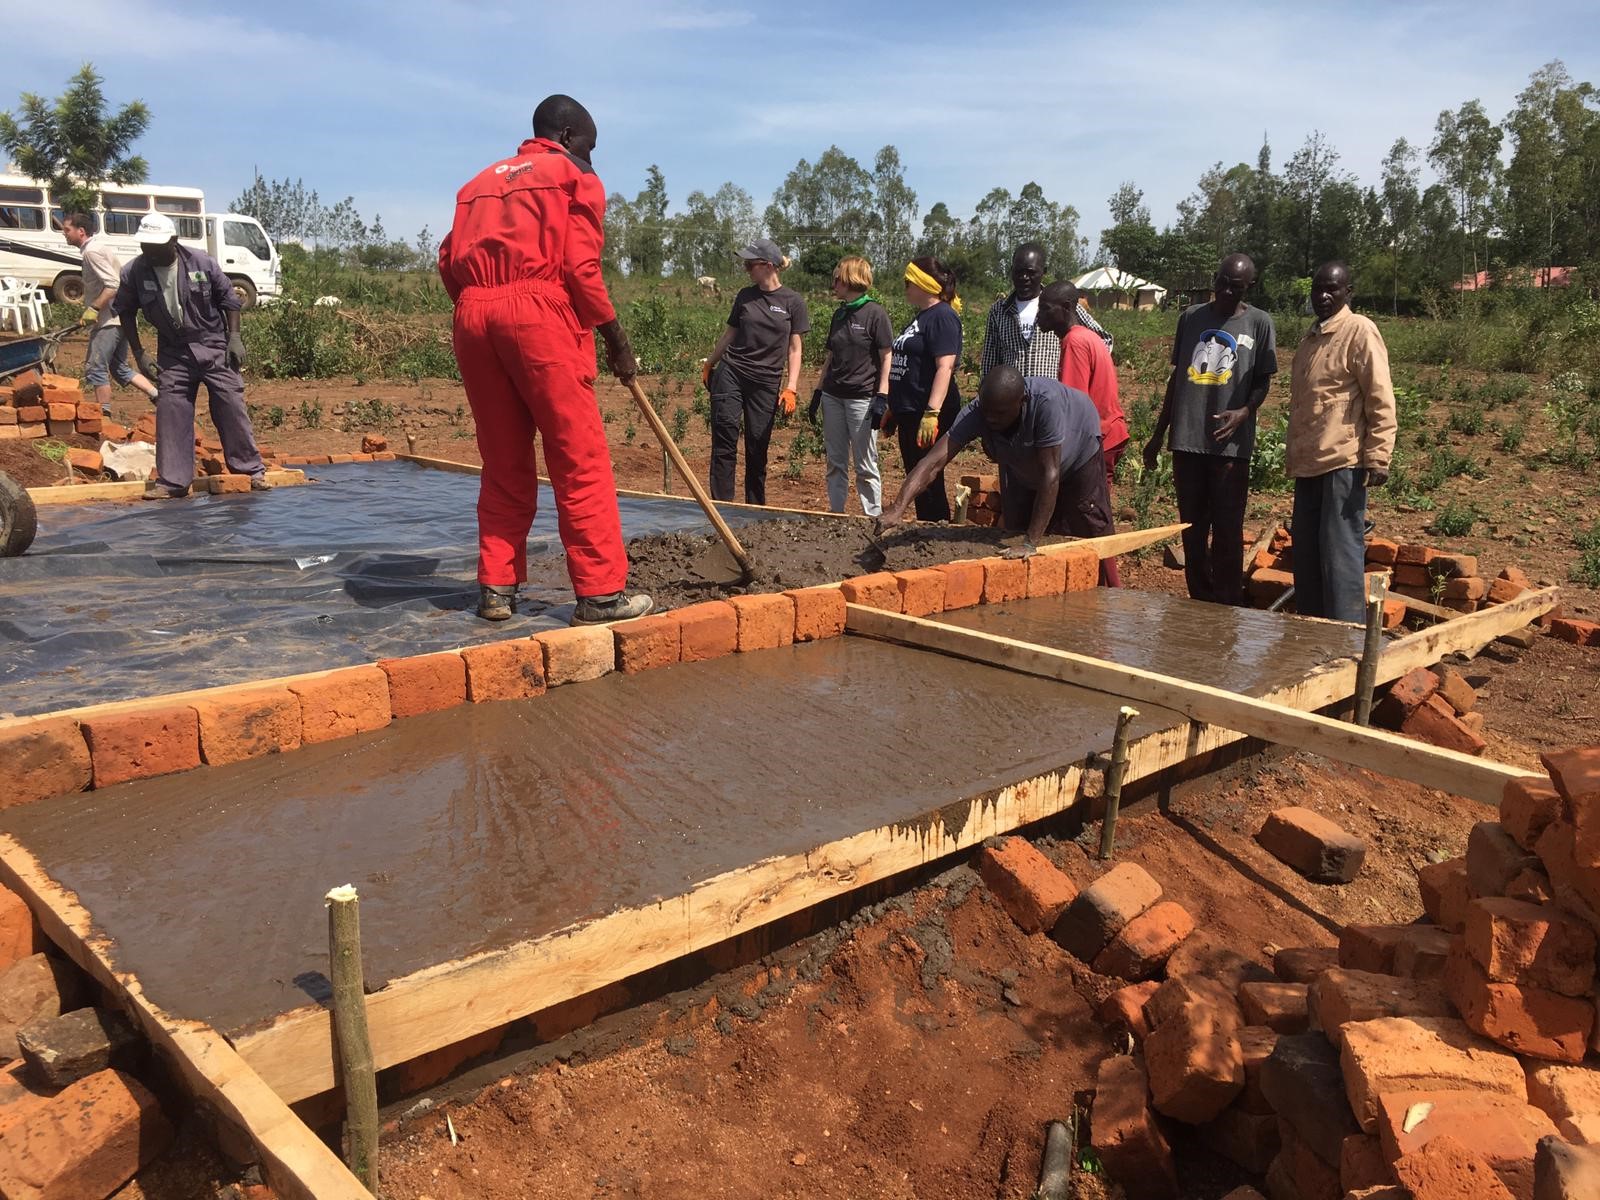 Home builders reflect on ‘humbling’ Kenya house build